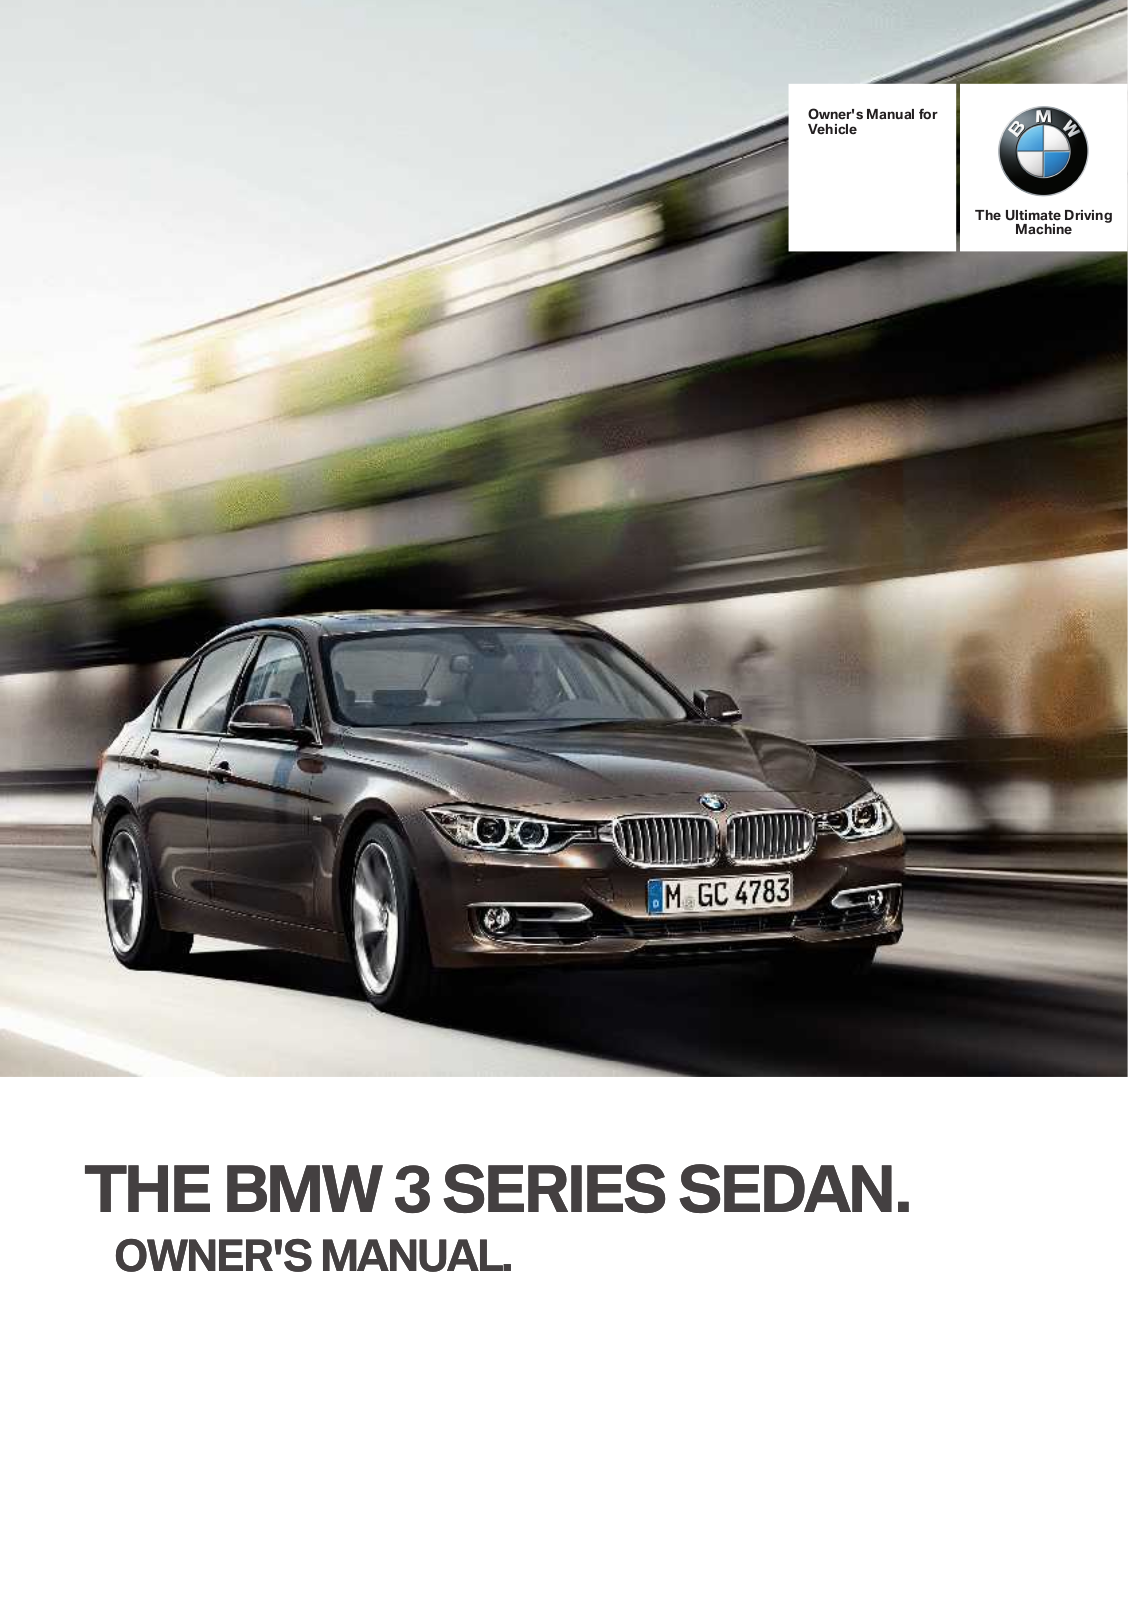 BMW 335i xDrive 2013 Owner's Manual